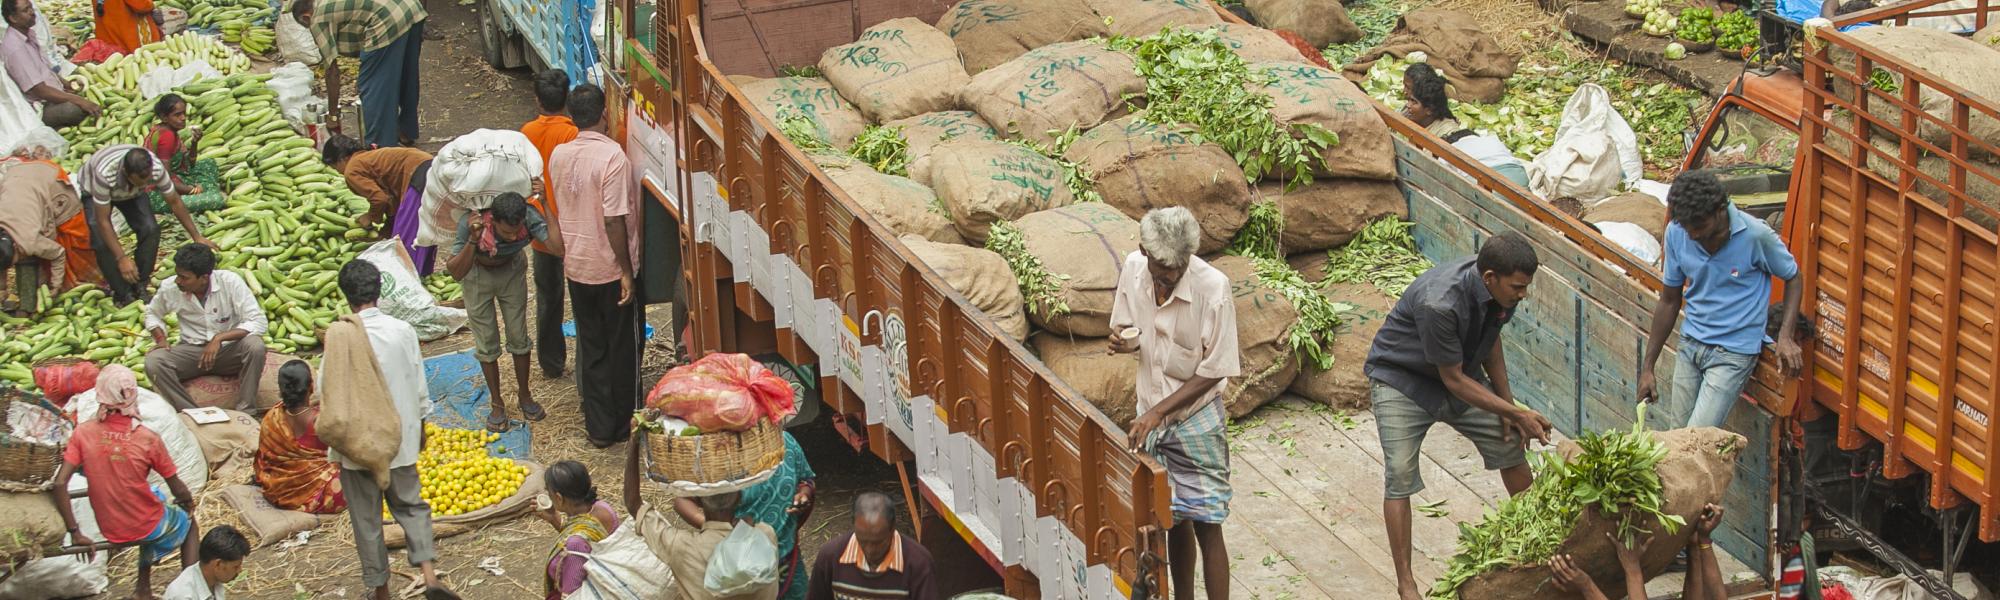 traders unloading goods New Delhi